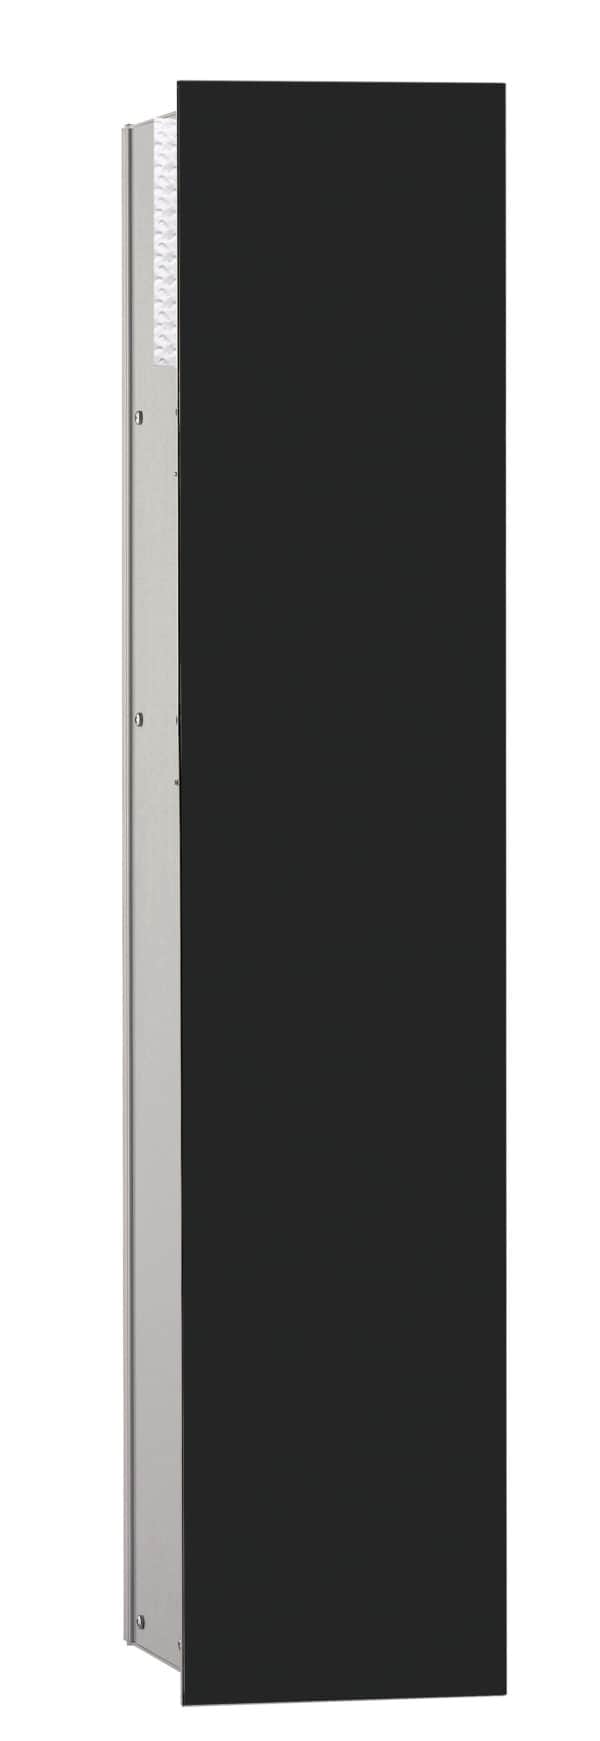 emco asis 2.0 Toiletmodule - inbouwmodule - zwart, 170 mm